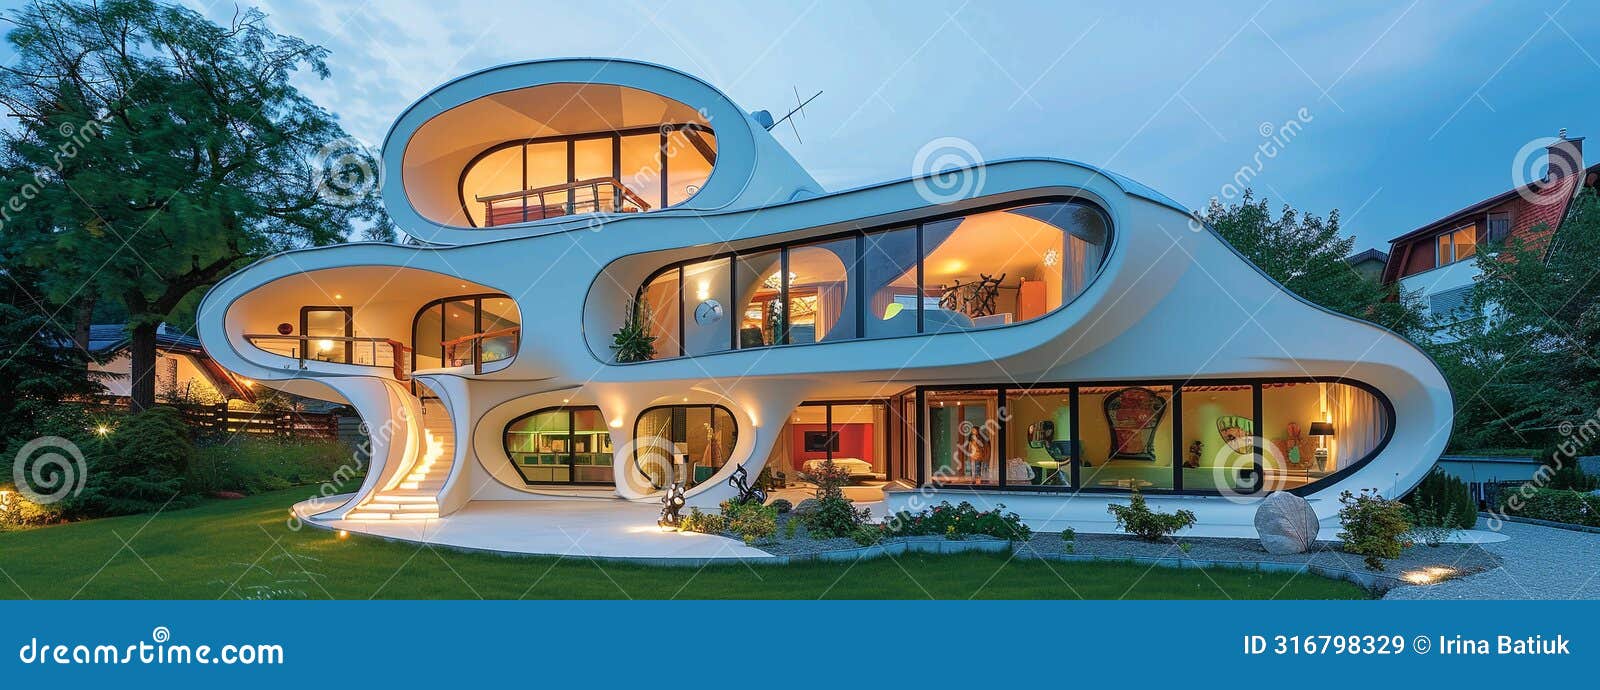 futuristic art nouveau house, future building smart unreal, cityspace abstract technology modernism interior details